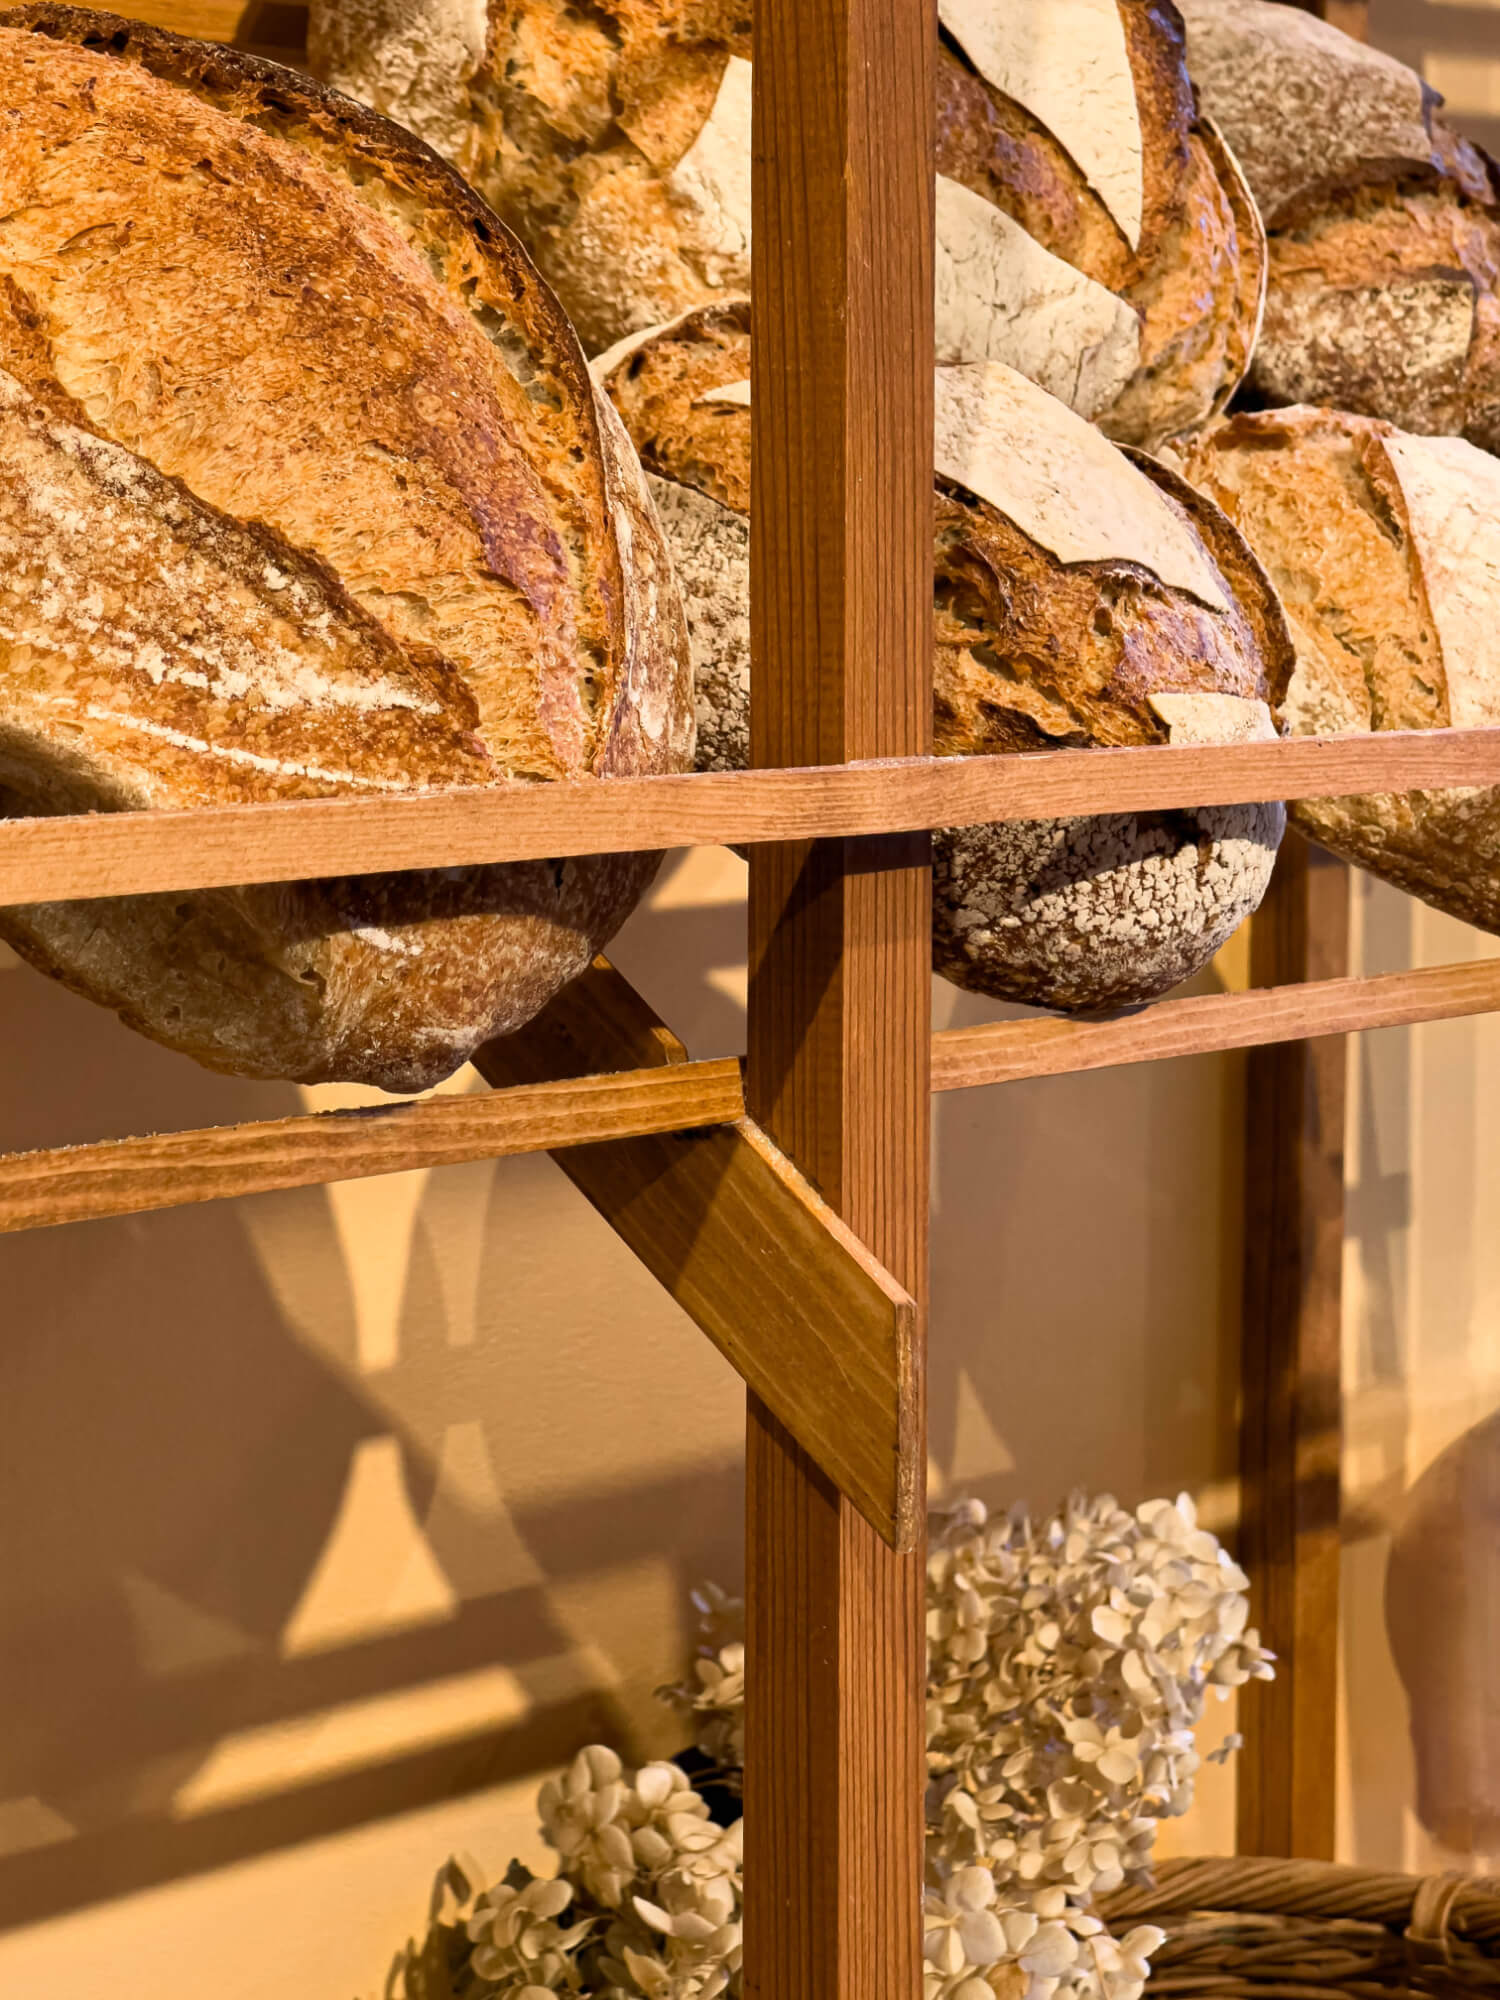 bread MOF - Shelves